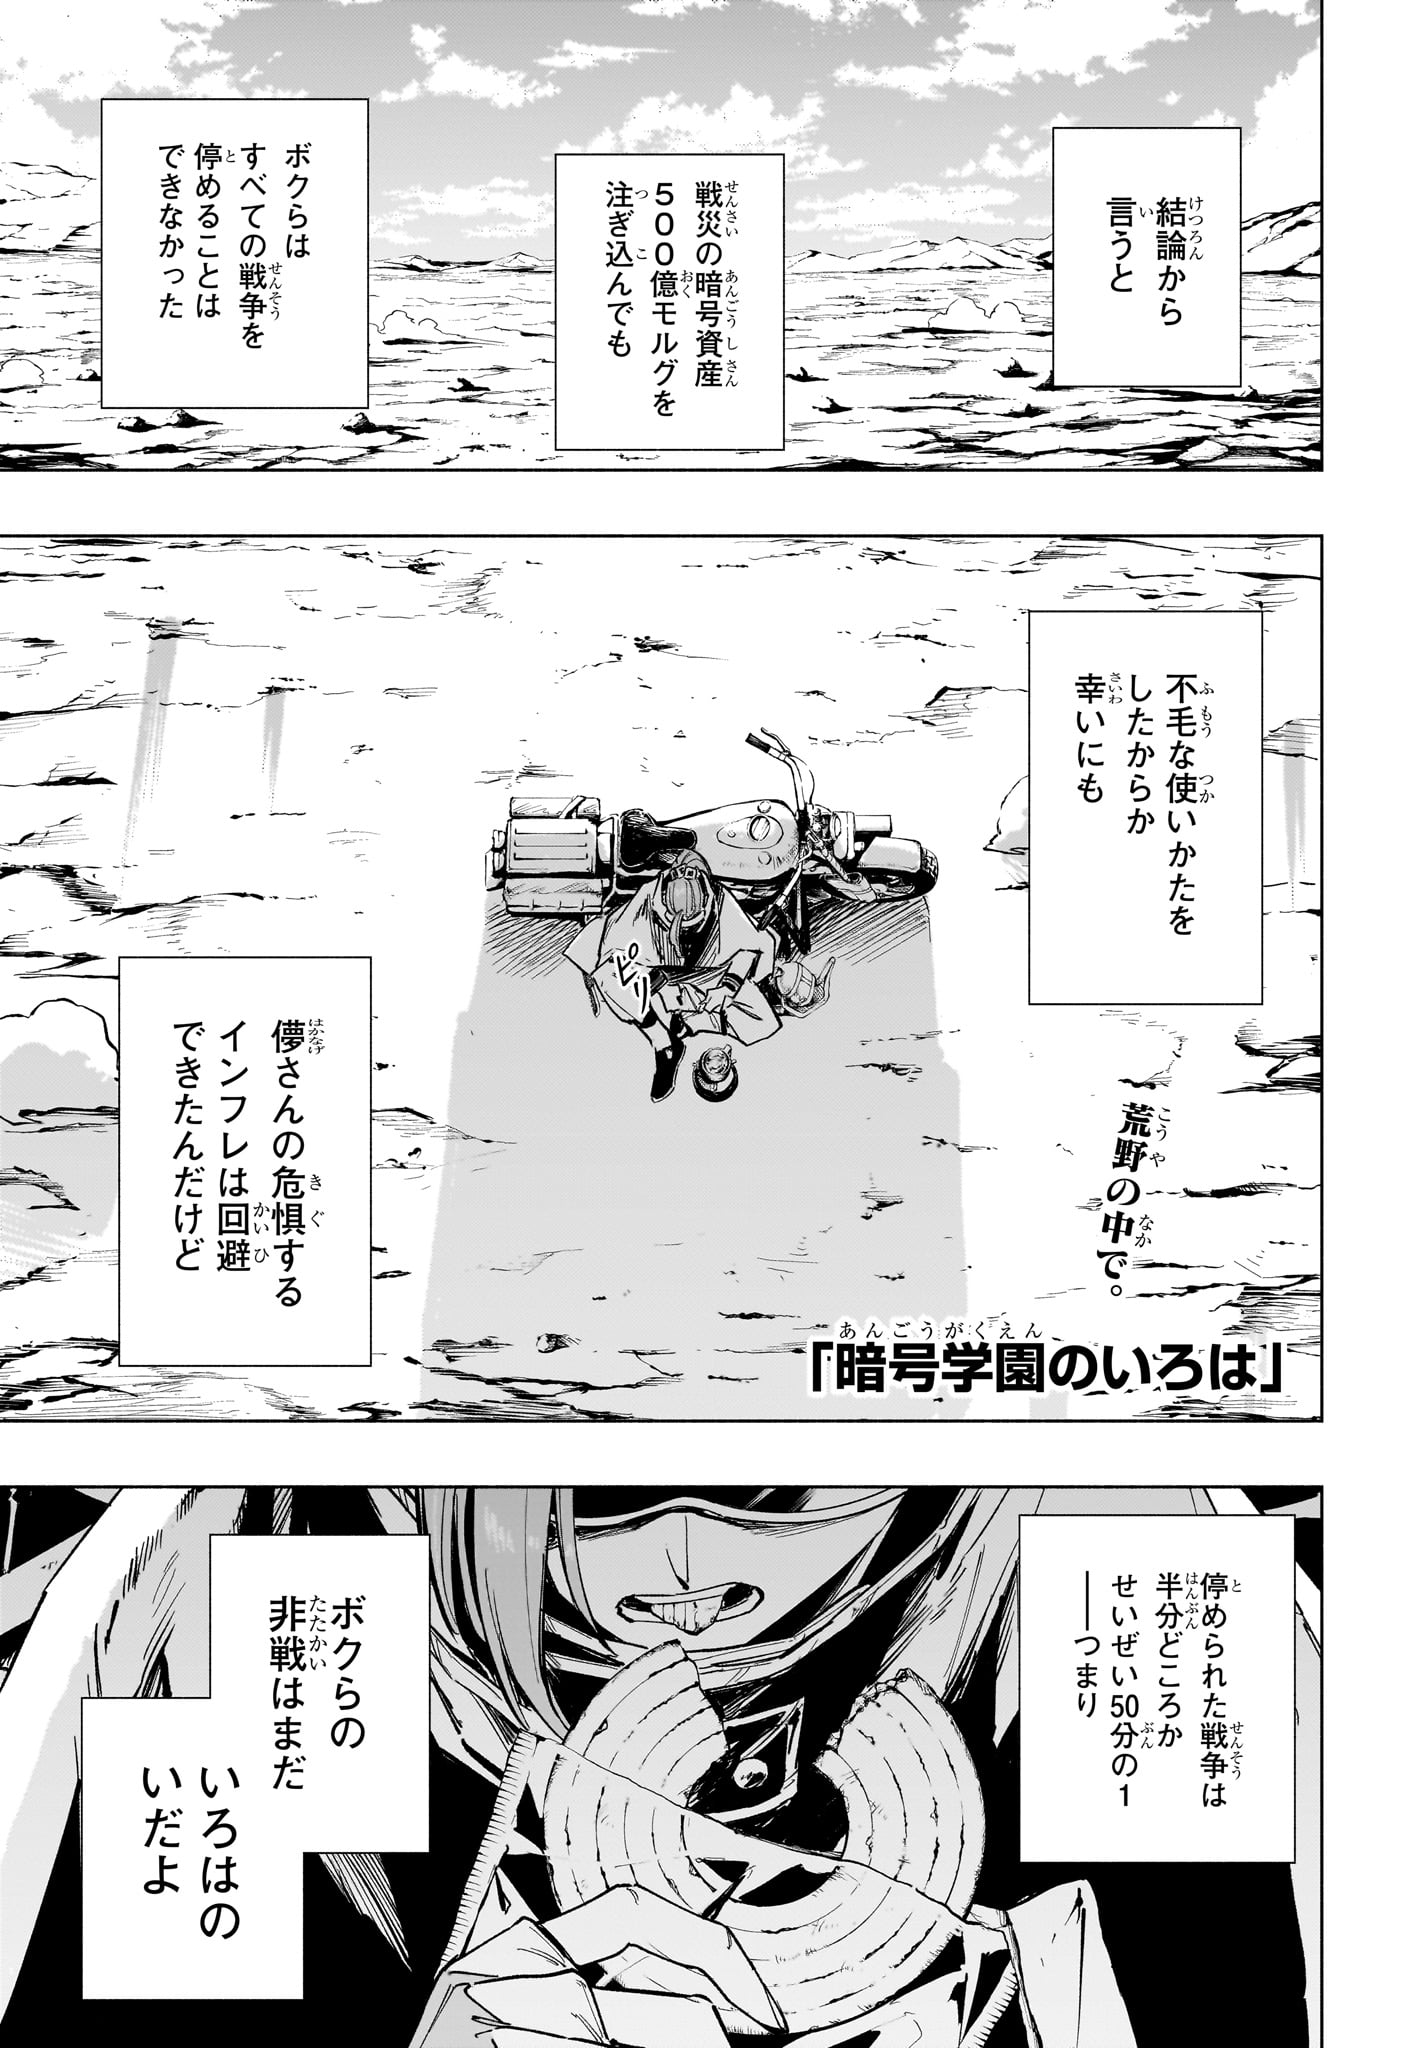 Angou Gakuen no Iroha - Chapter 58 - Page 1